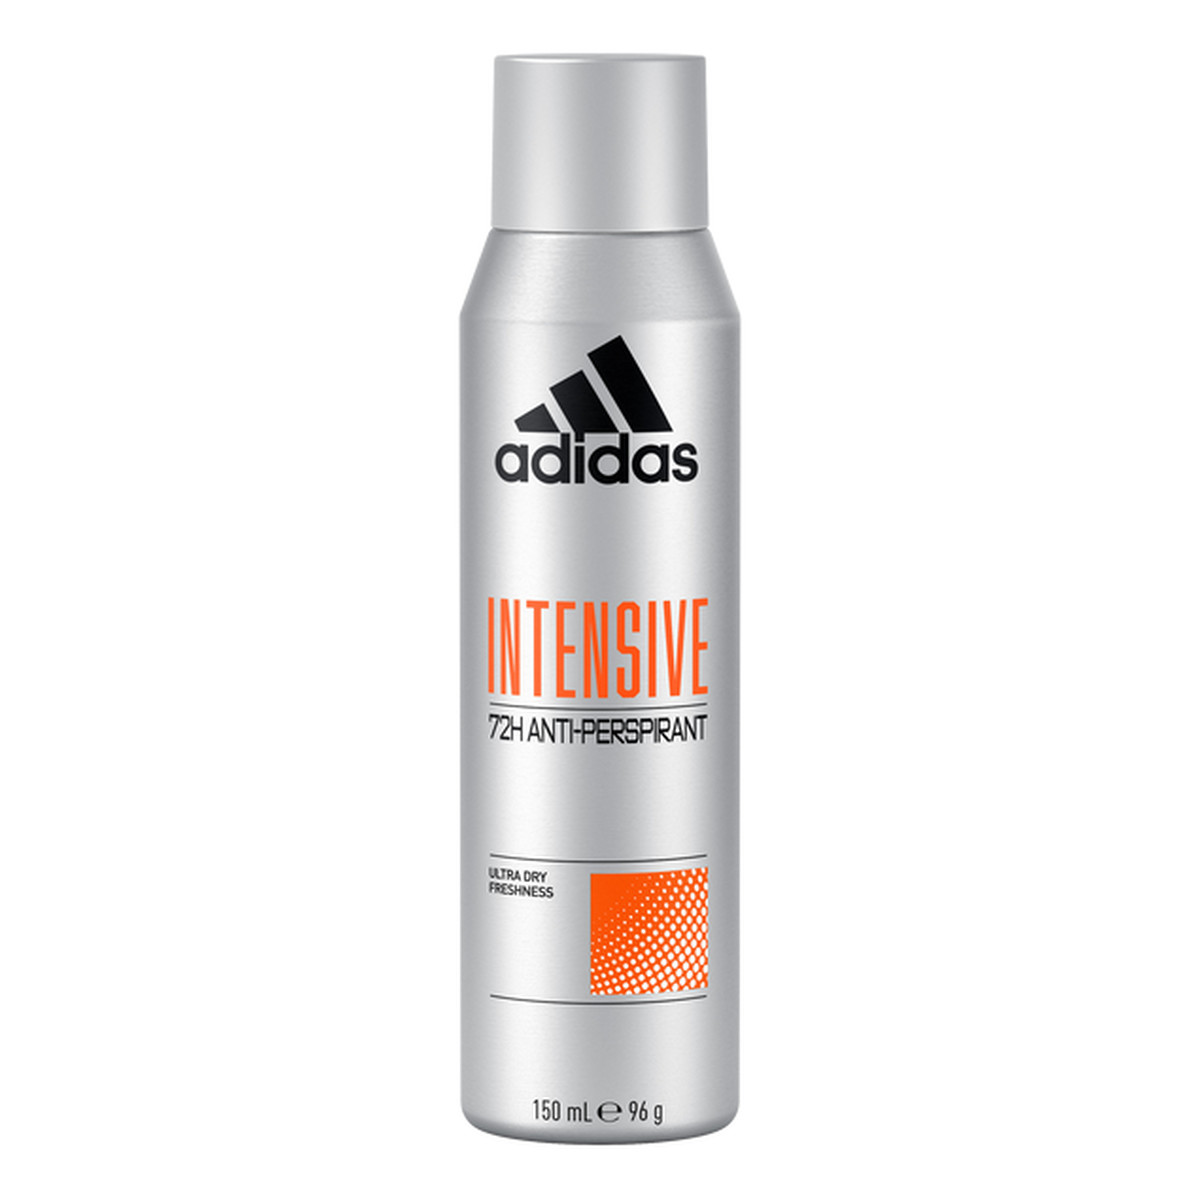 Adidas Intensive Antyperspirant spray 72H 150ml